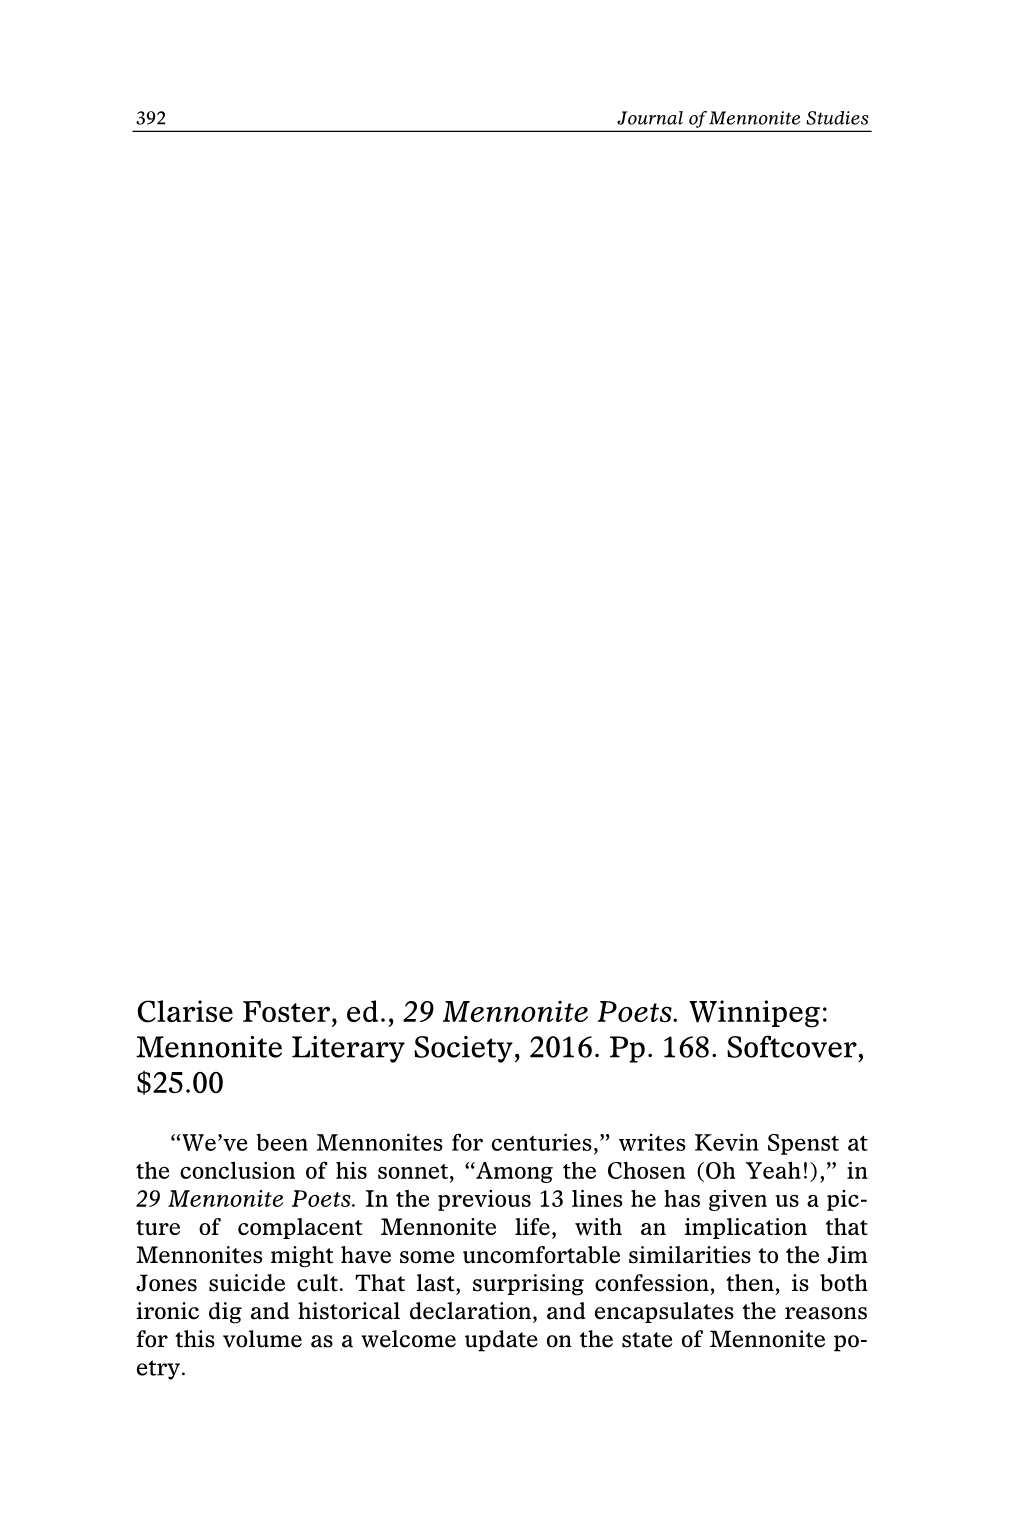 Clarise Foster, Ed., 29 Mennonite Poets. Winnipeg: Mennonite Literary Society, 2016